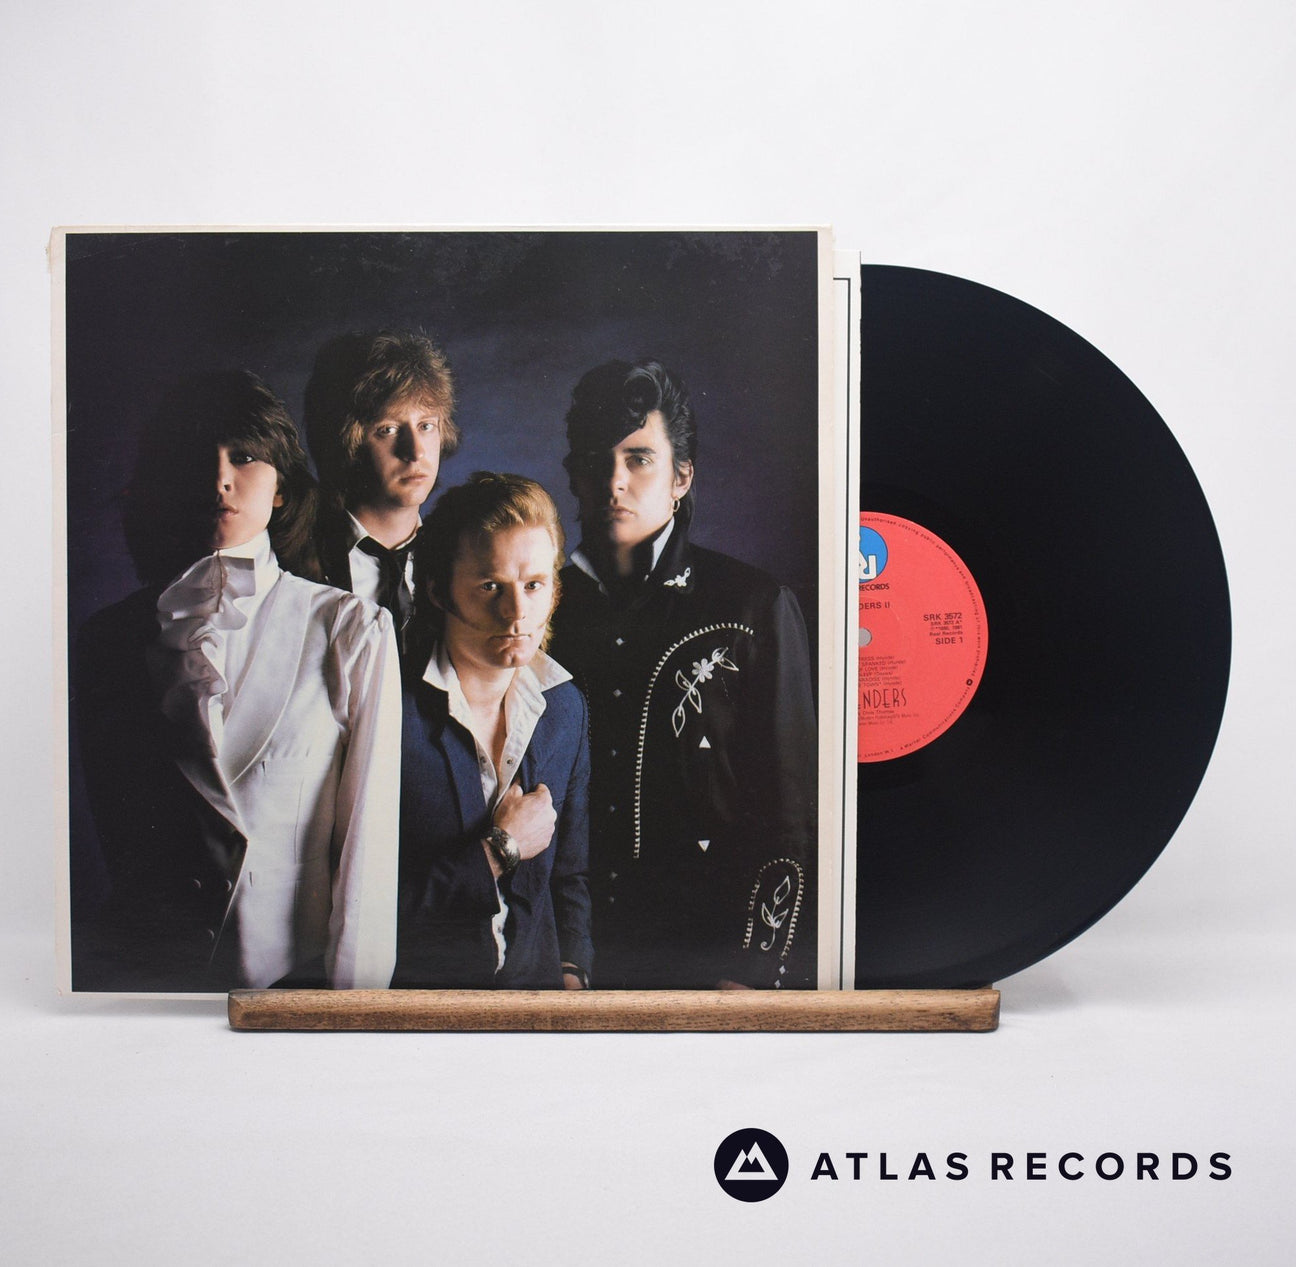 The Pretenders Pretenders II LP Vinyl Record - Front Cover & Record